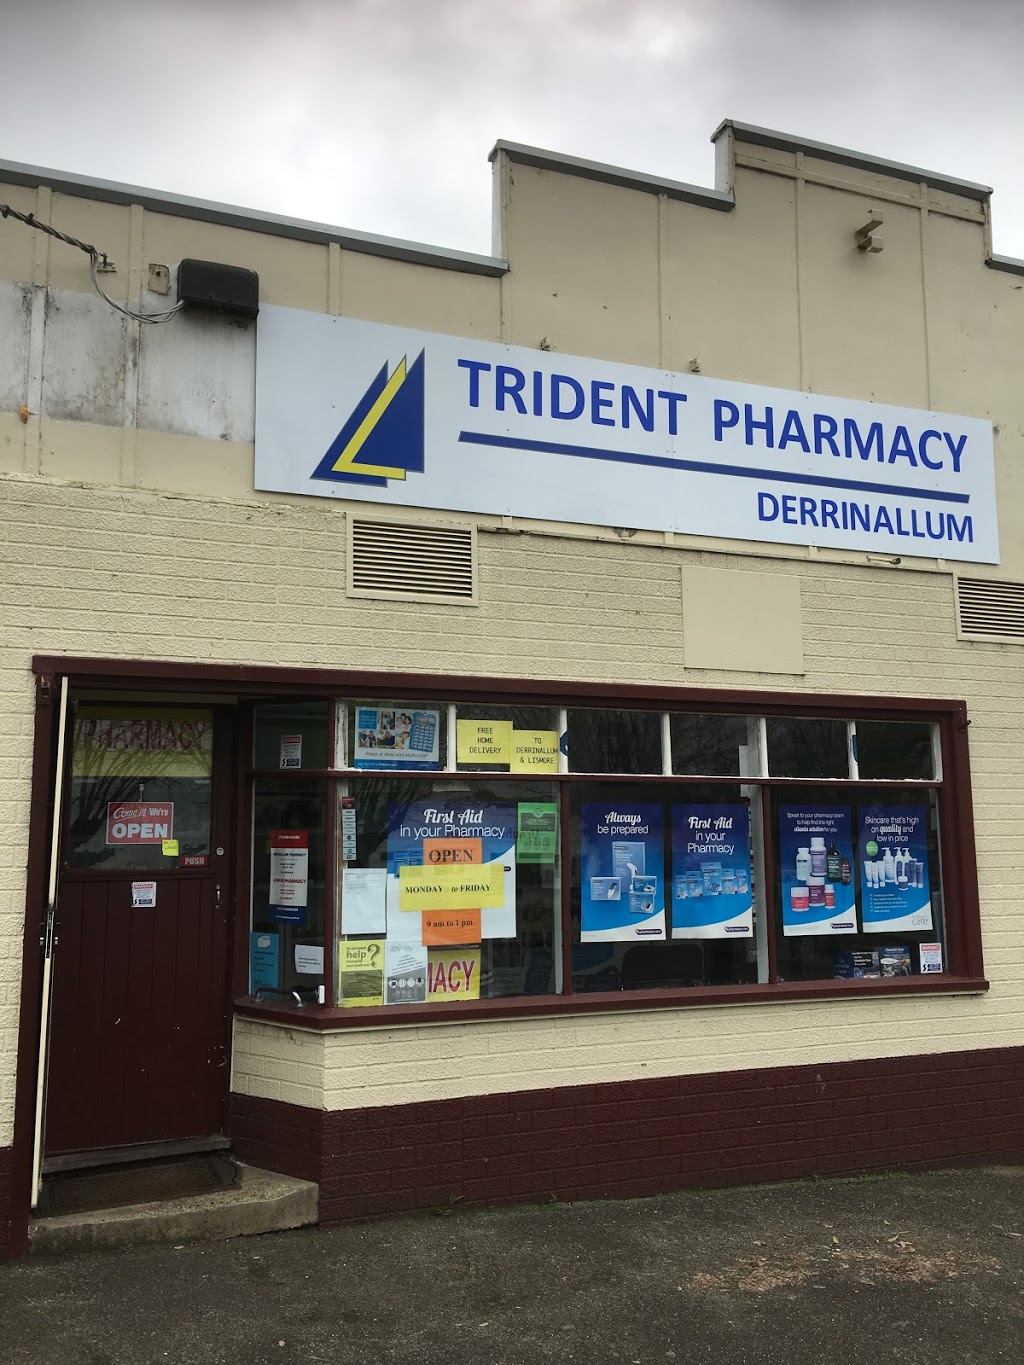 Trident Pharmacy Derrinallum | health | 18 Main St, Derrinallum VIC 3325, Australia | 0353090445 OR +61 3 5309 0445